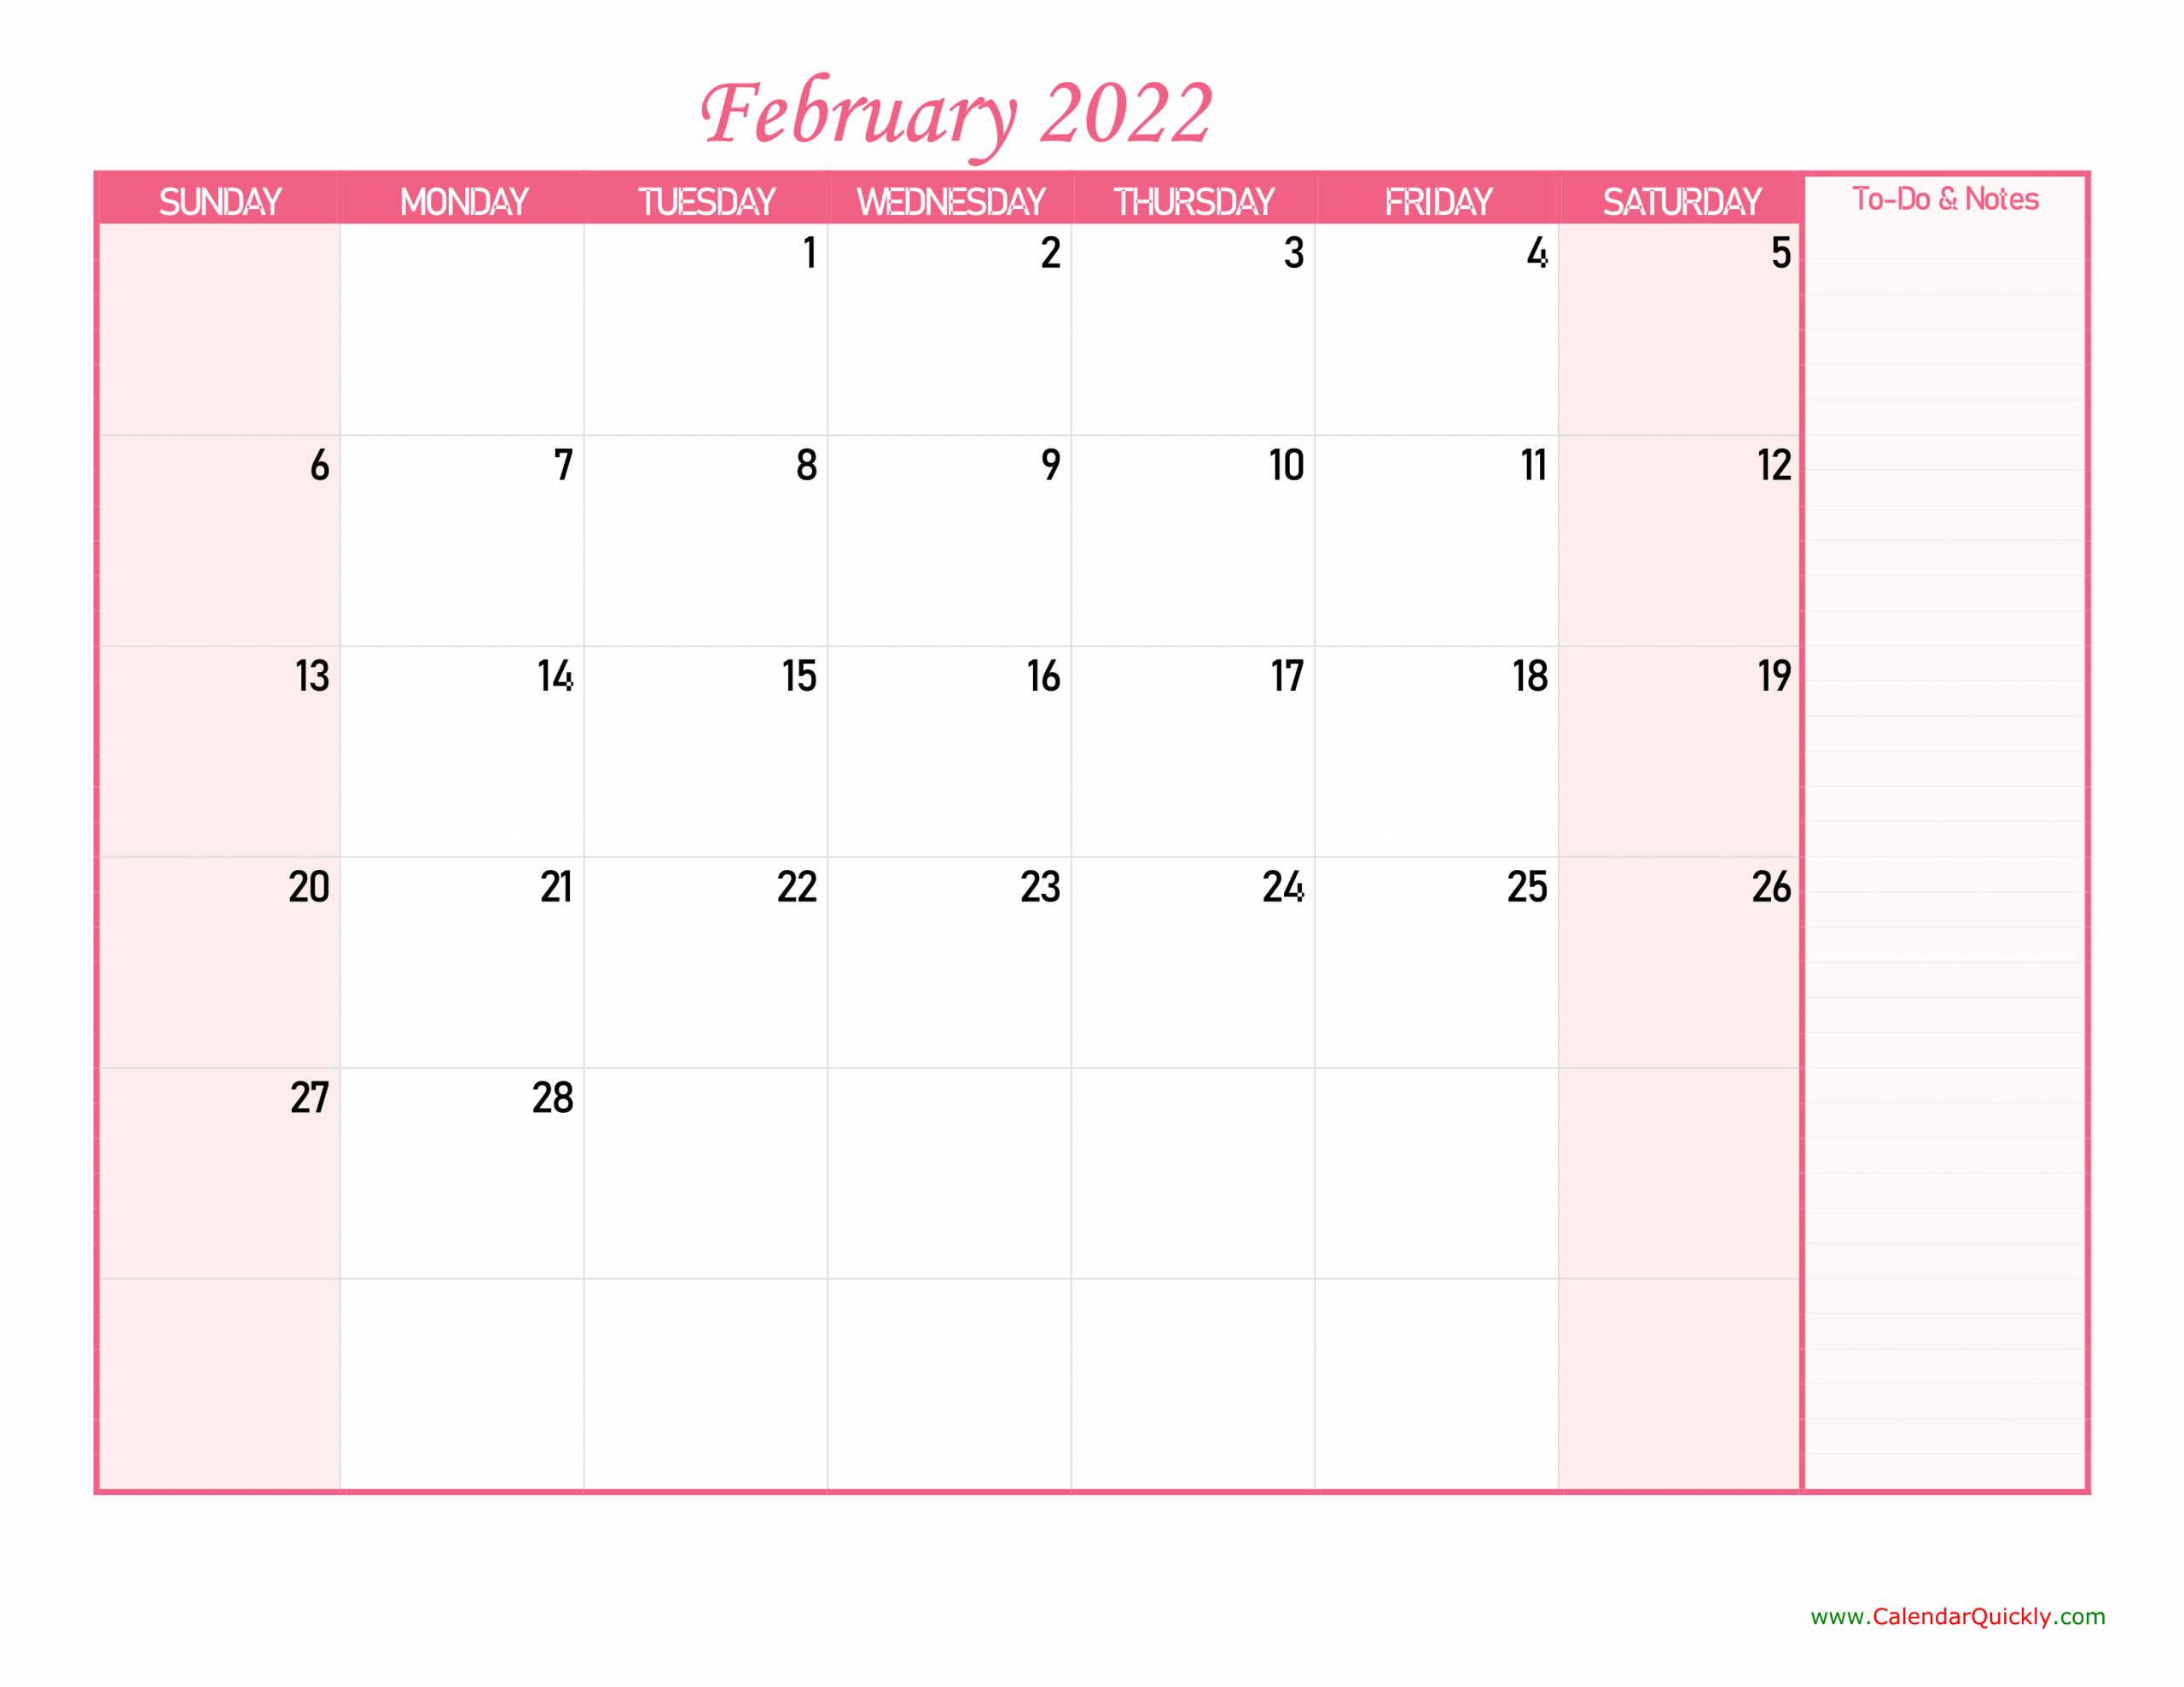 February Calendar 2022 With Notes | Calendar Quickly